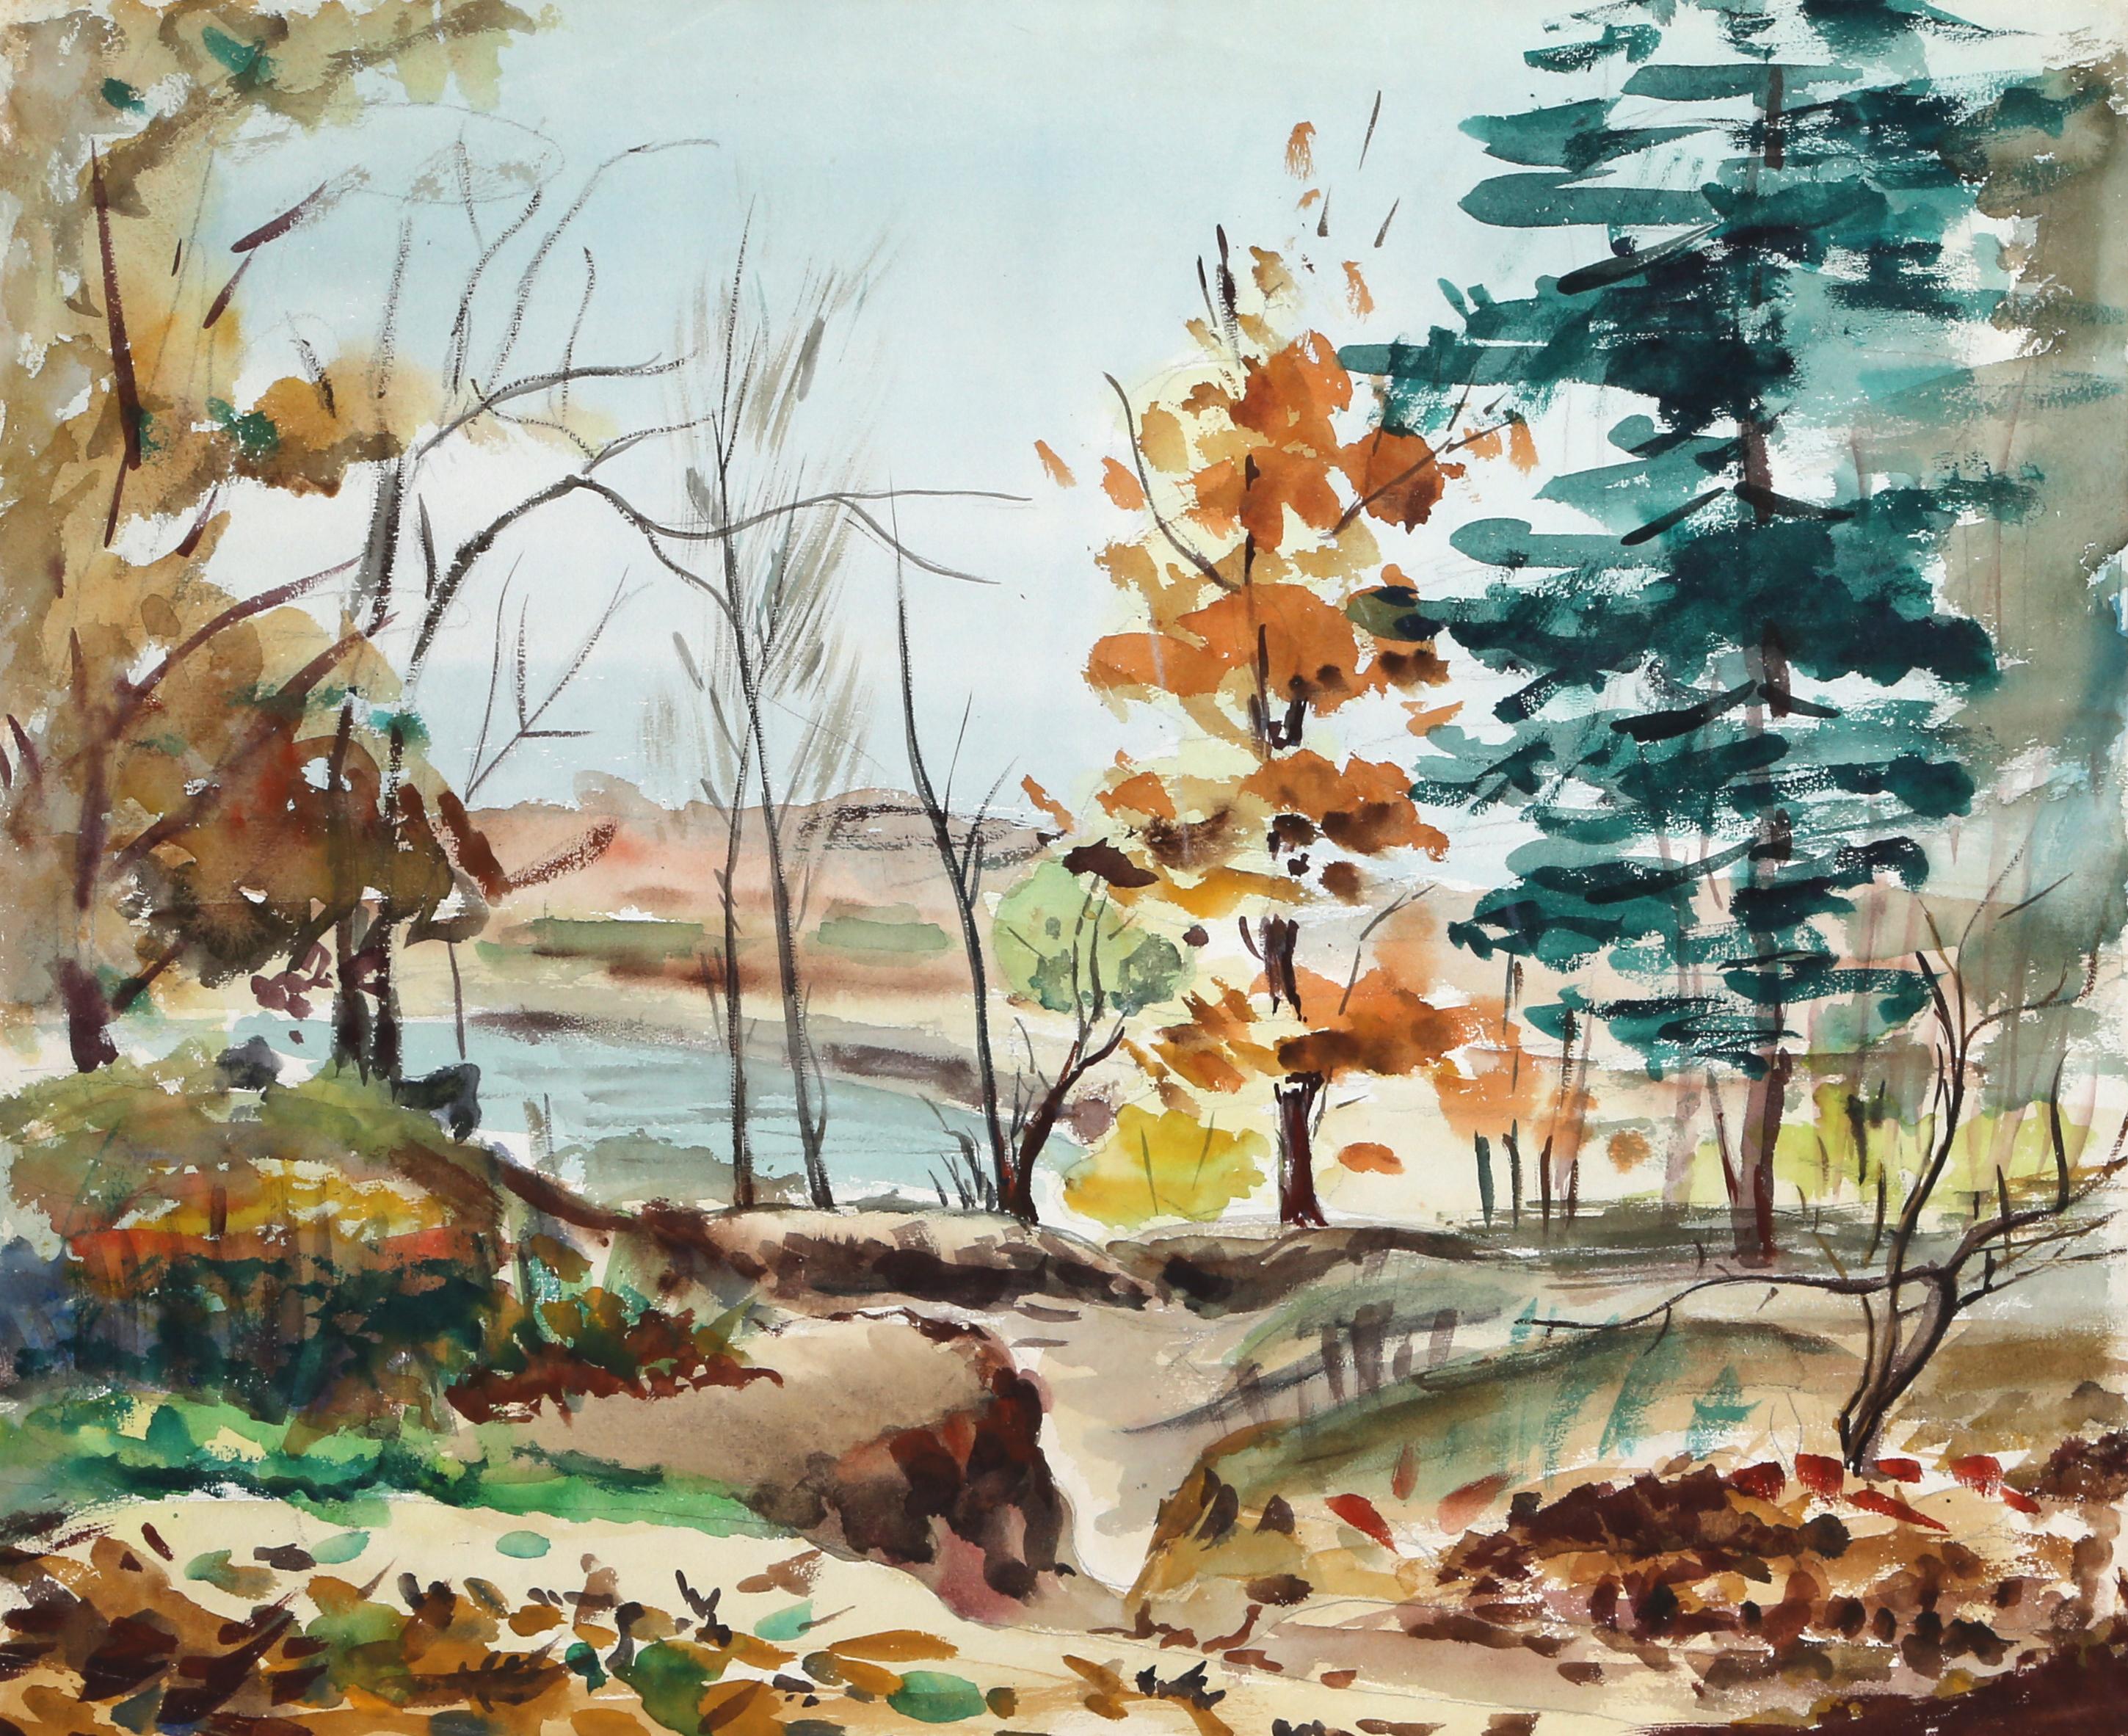 Eve Nethercott, "Fall", New England Landscape